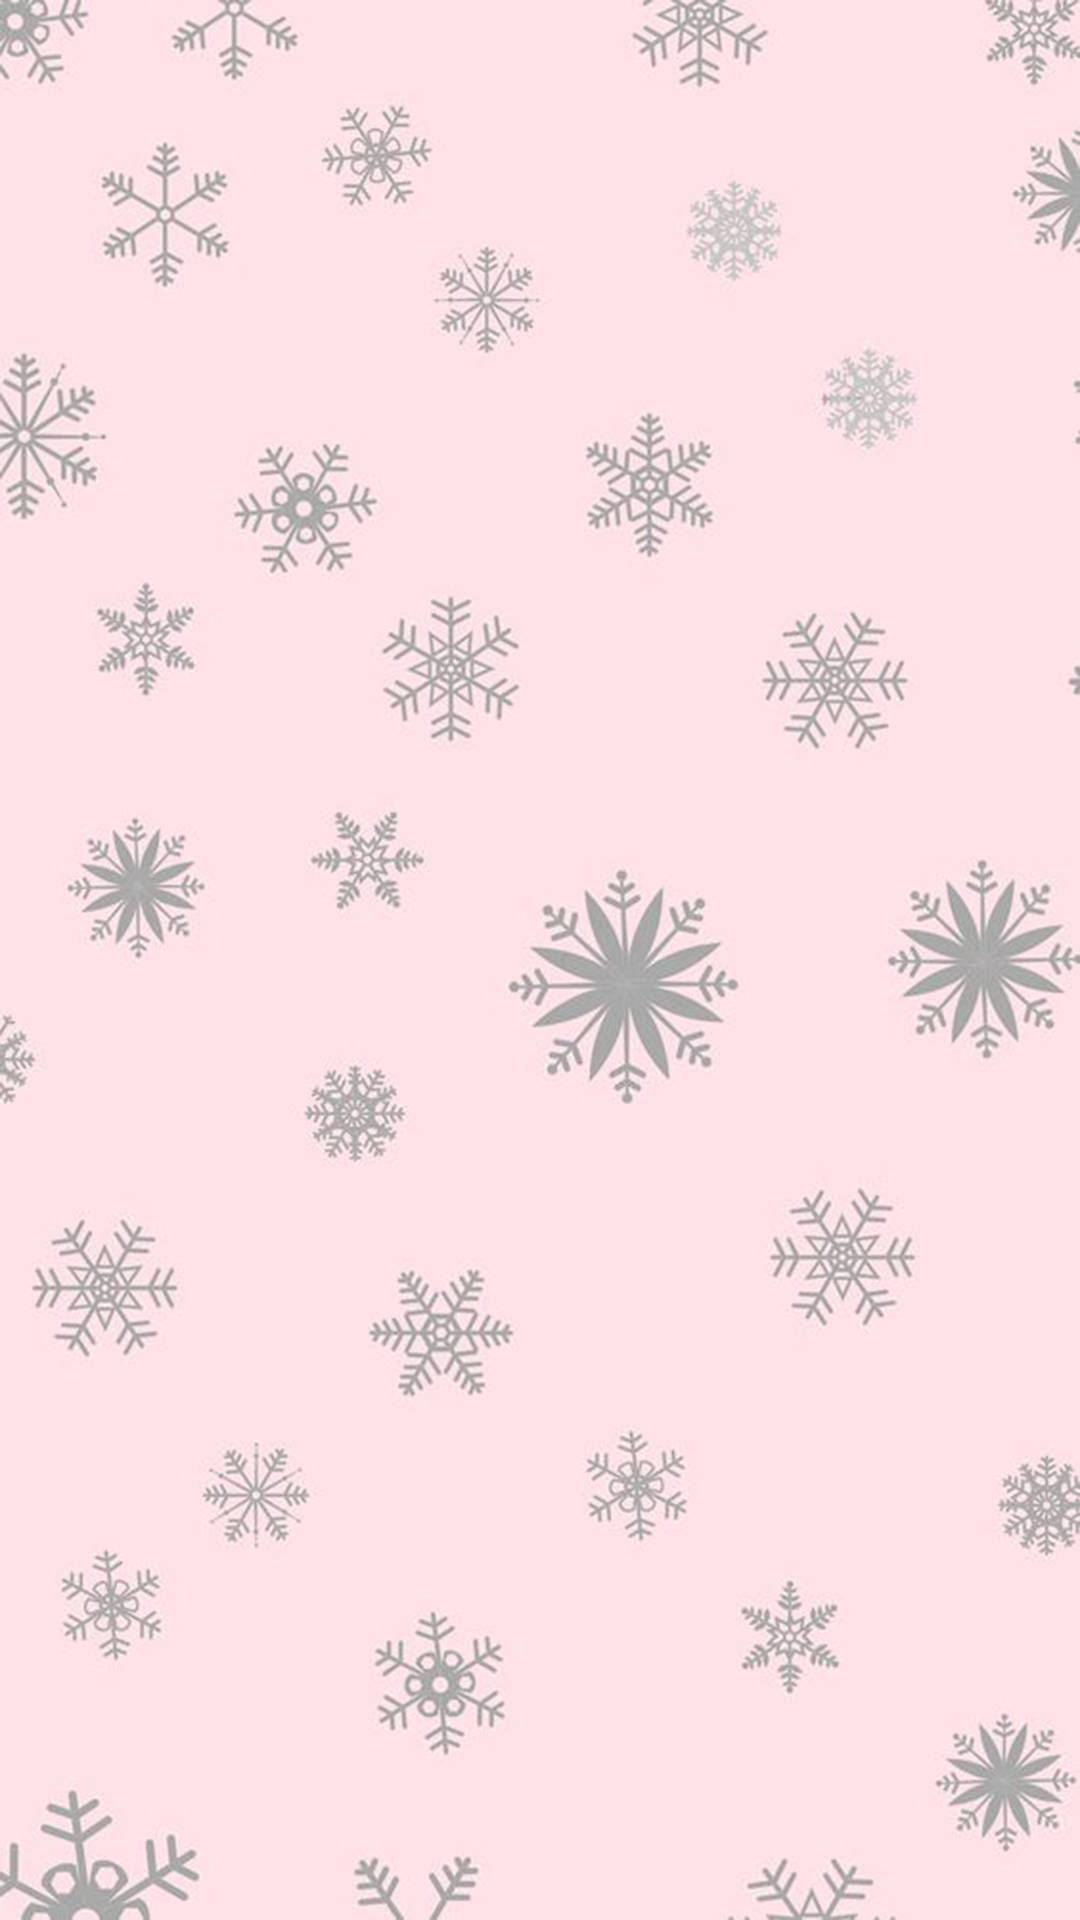 Instagram Story Winter Snowflakes Pattern